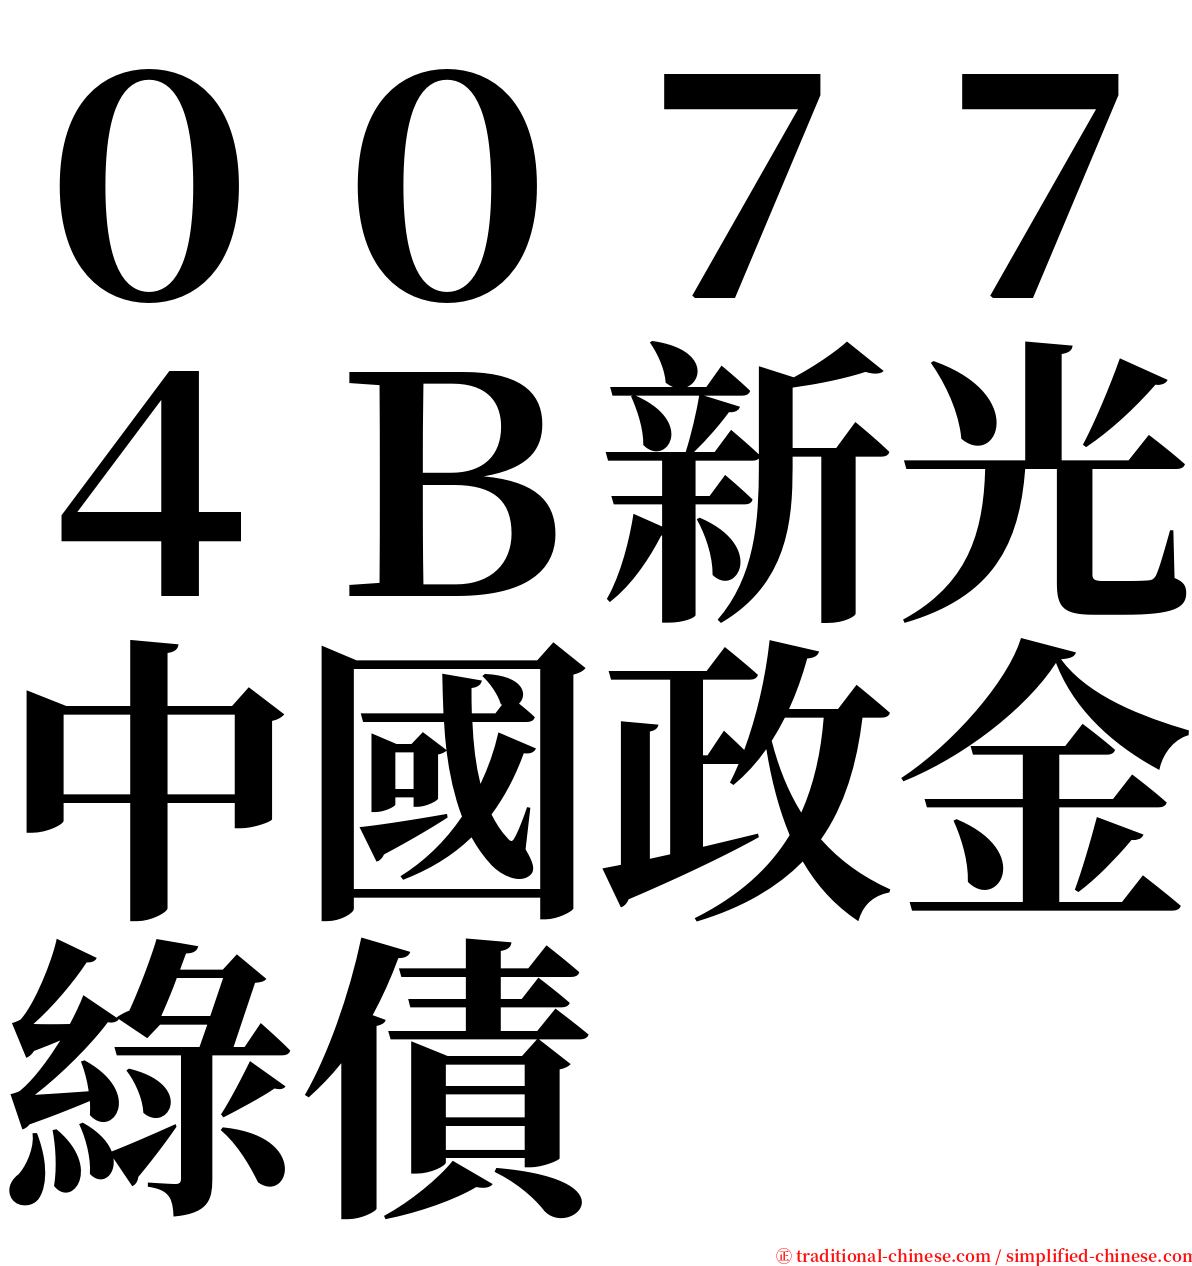 ００７７４Ｂ新光中國政金綠債 serif font